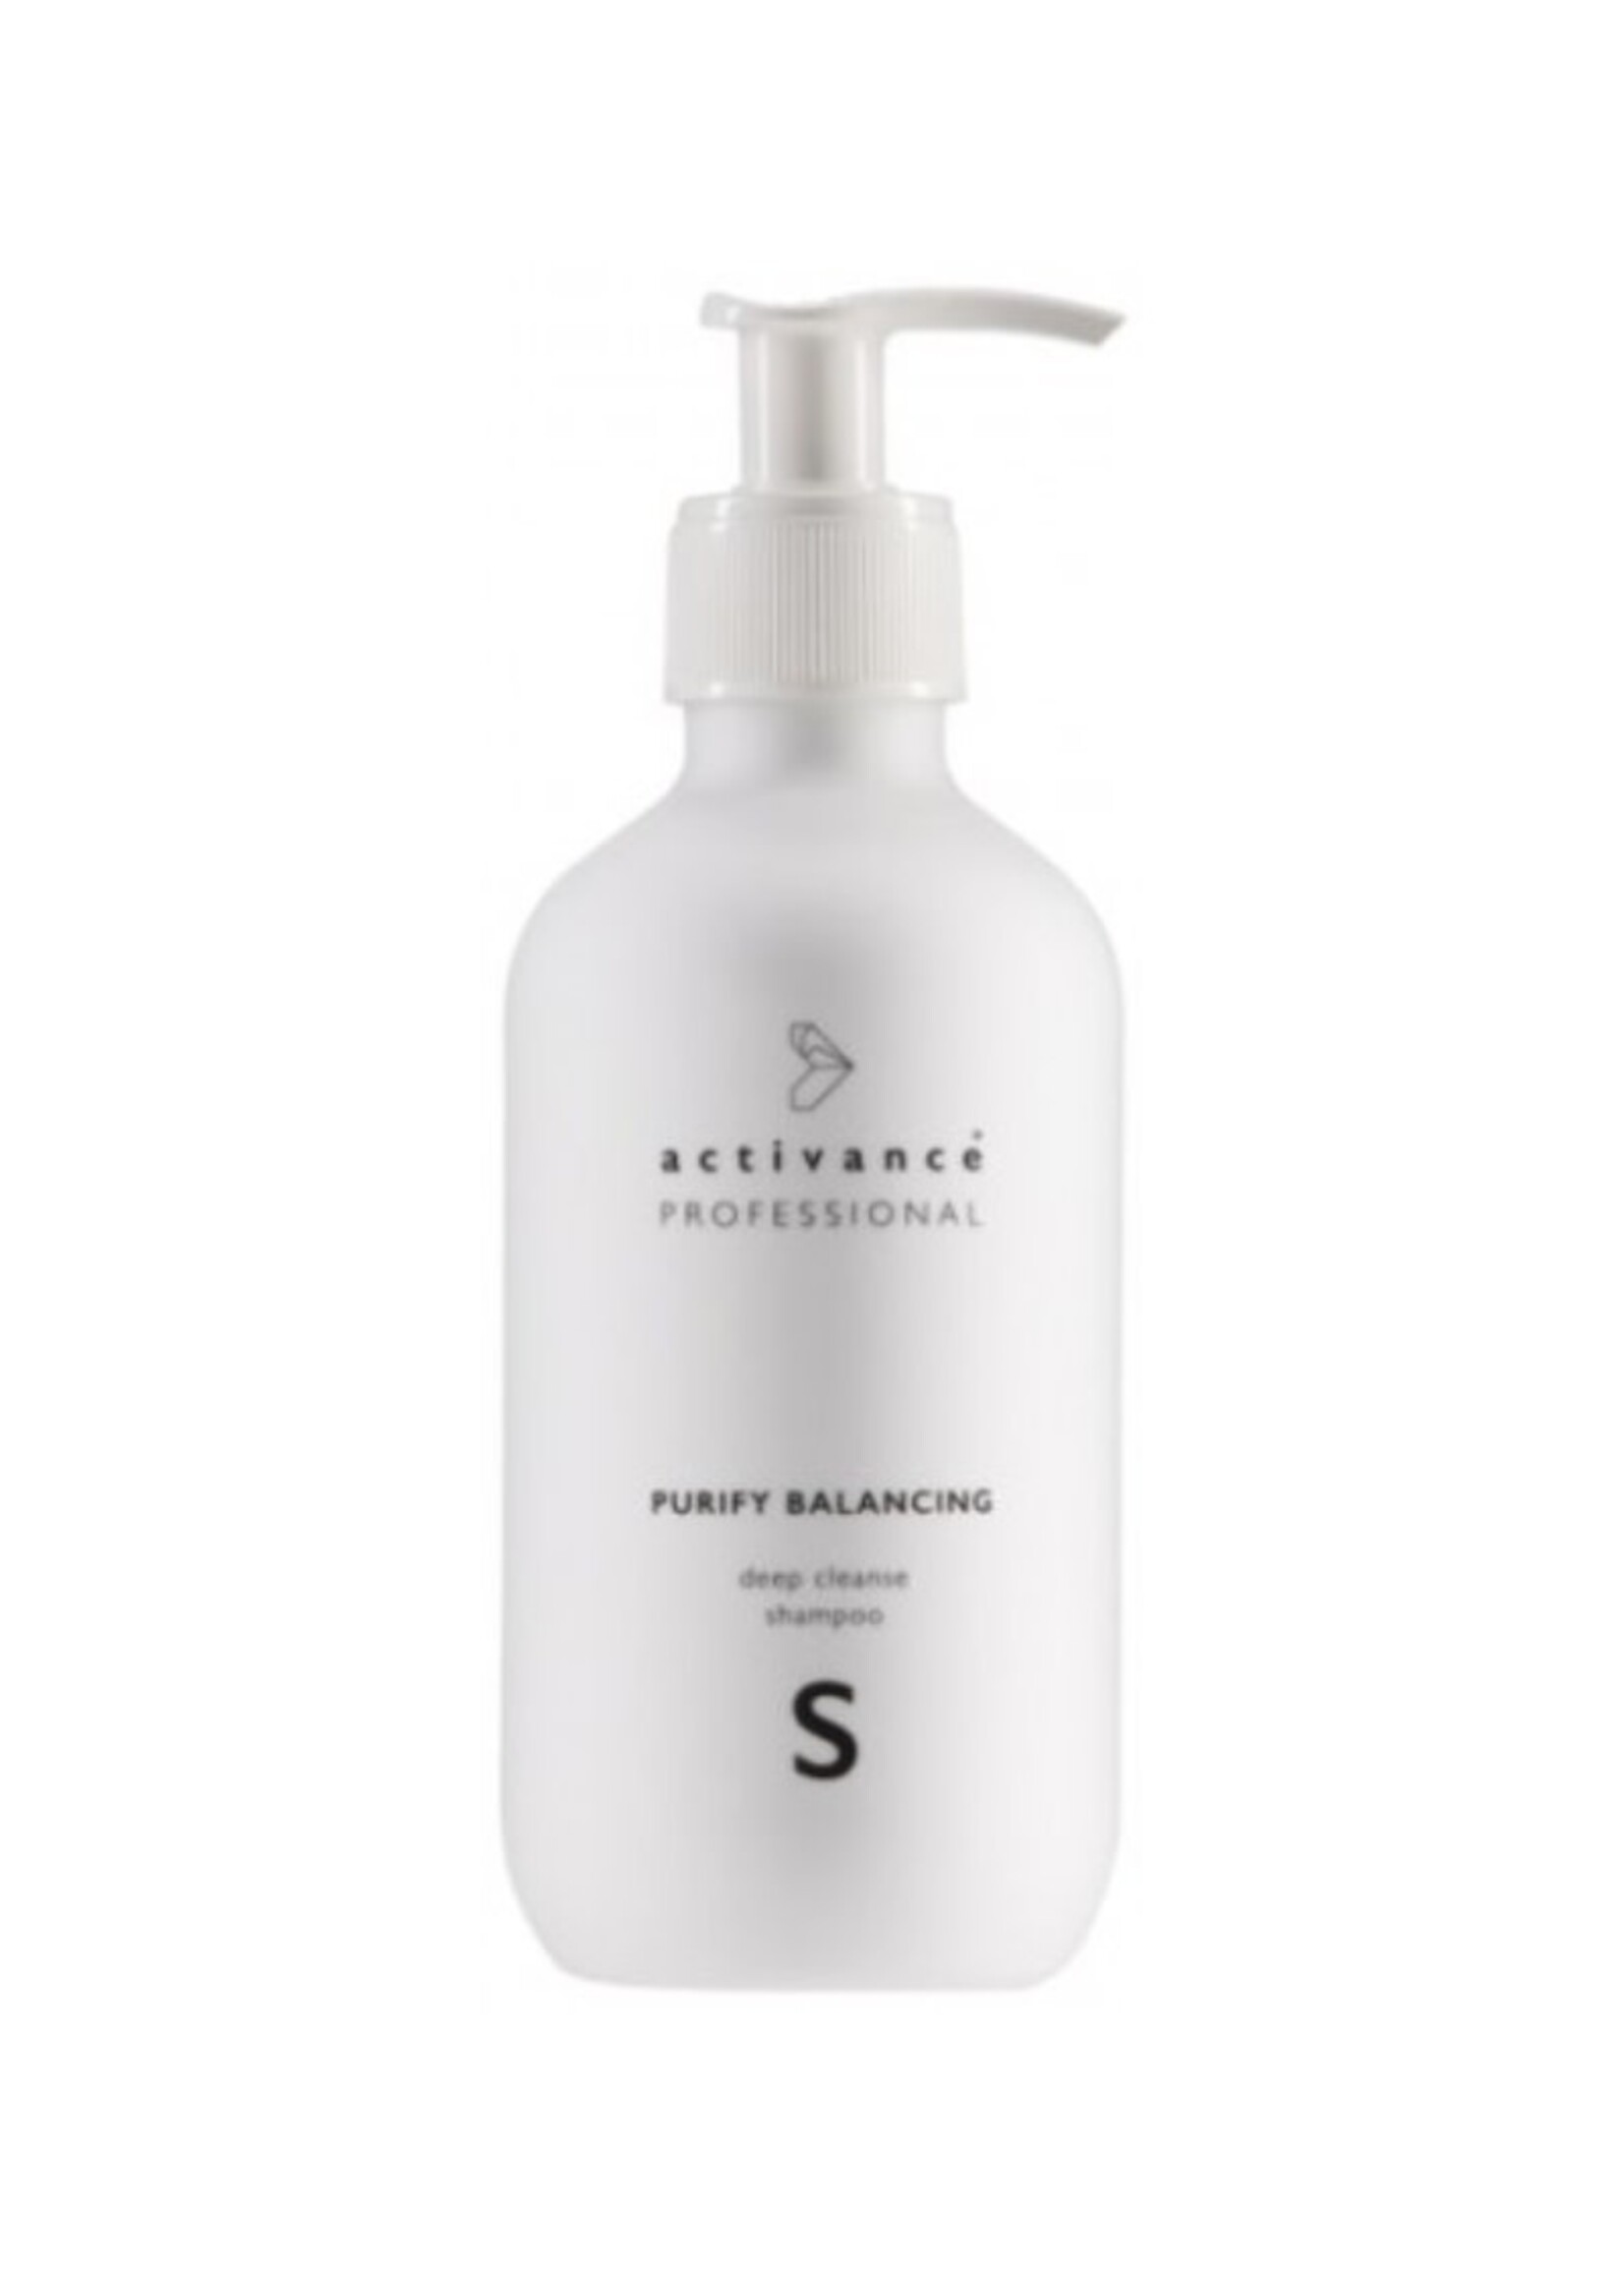 Activance Professional Activance Professional Purify Balancing Shampoo 300ml